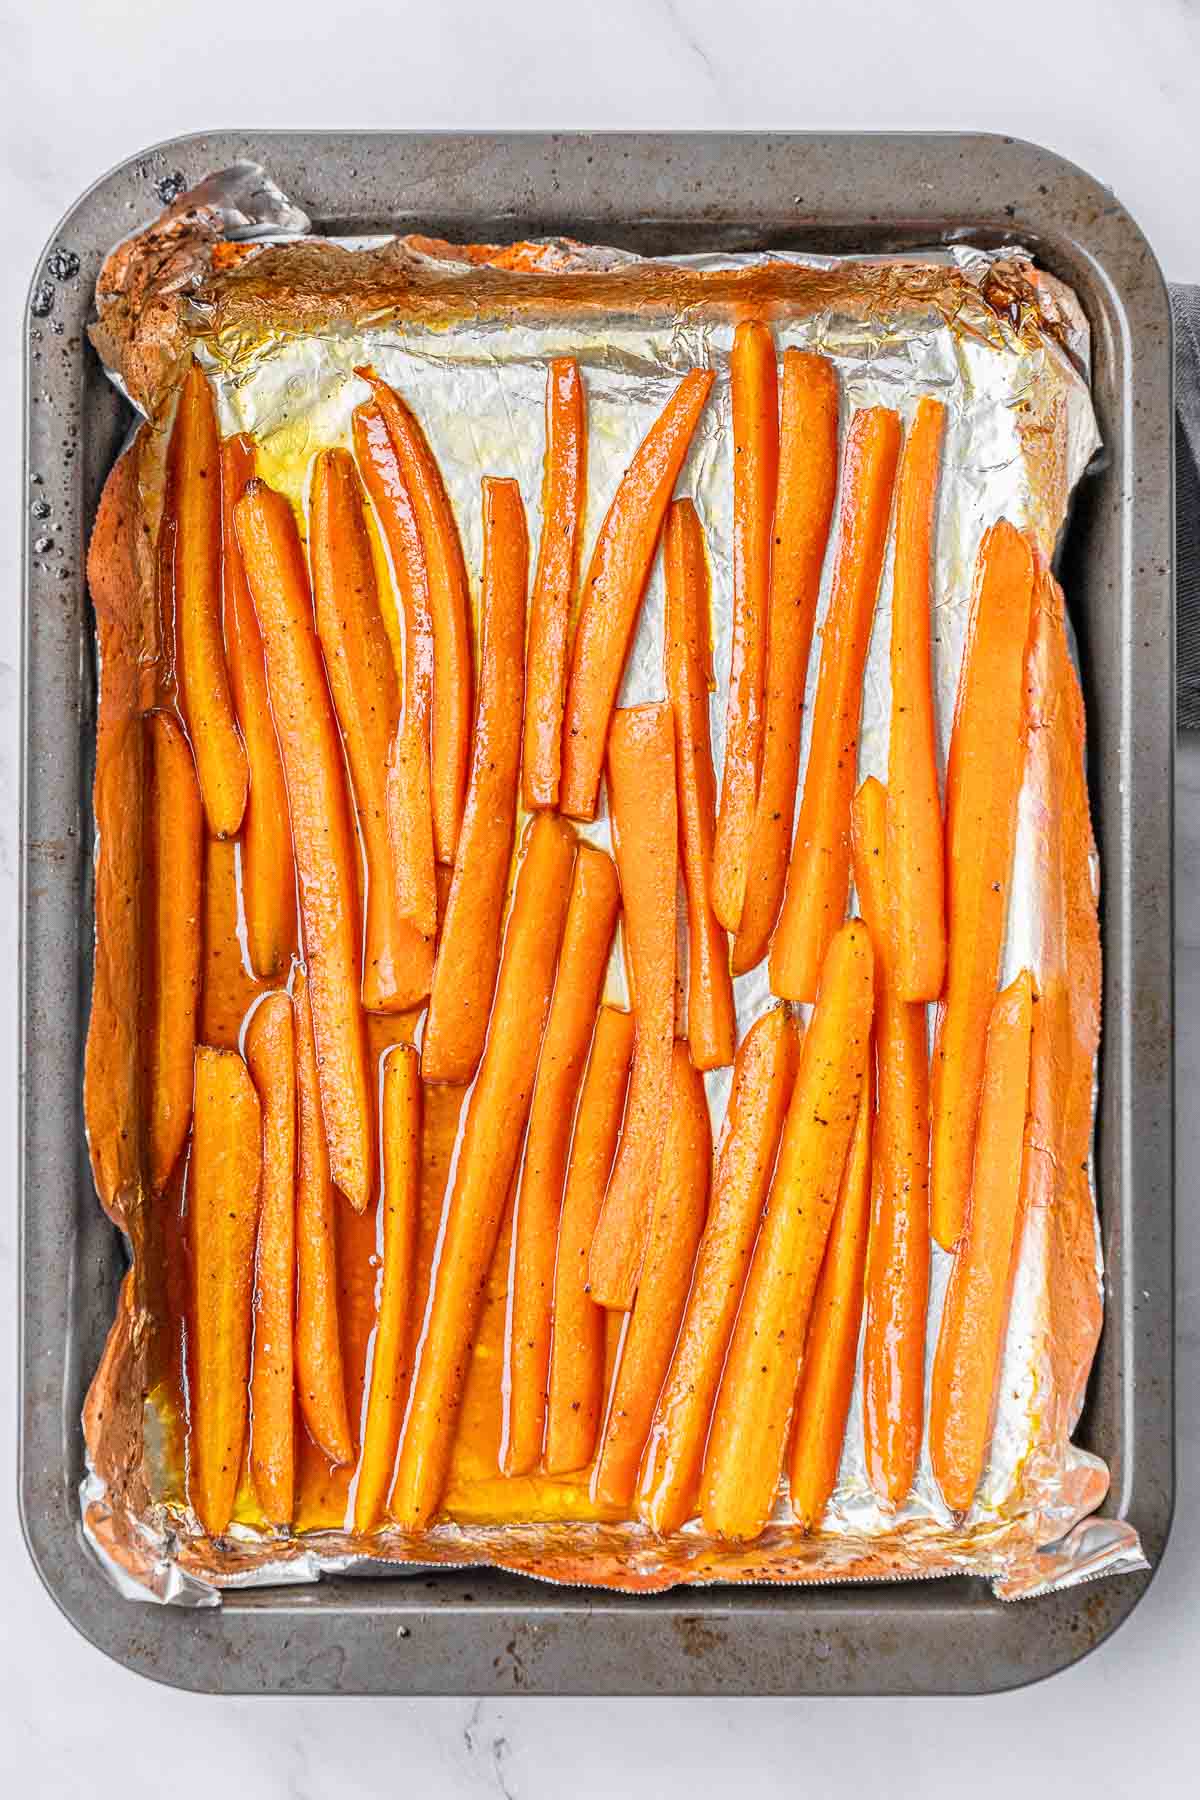 Glazed roasted carrot slices on a baking sheet.